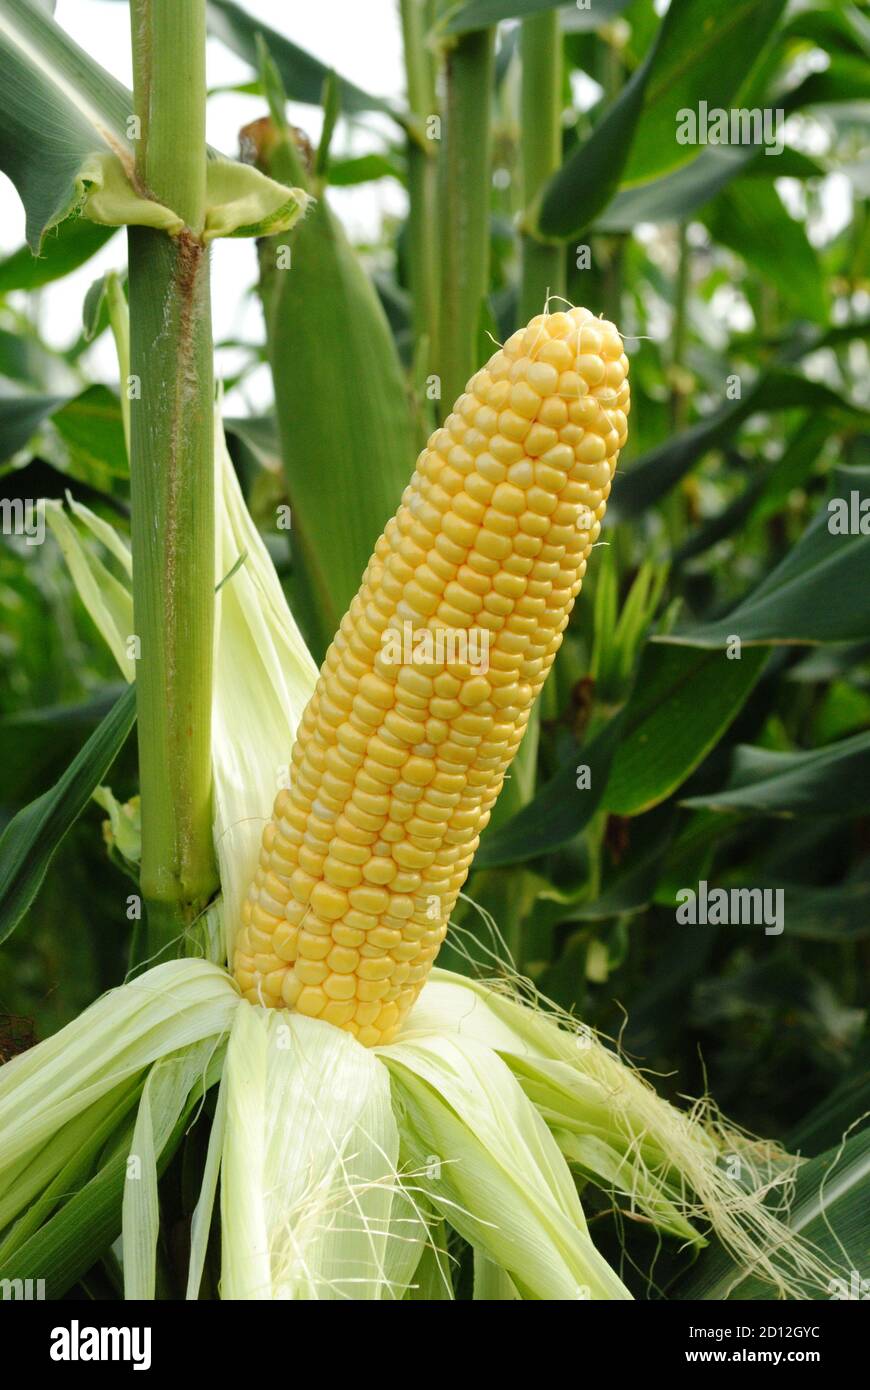 Sweet corn grow on plant Stock Photo